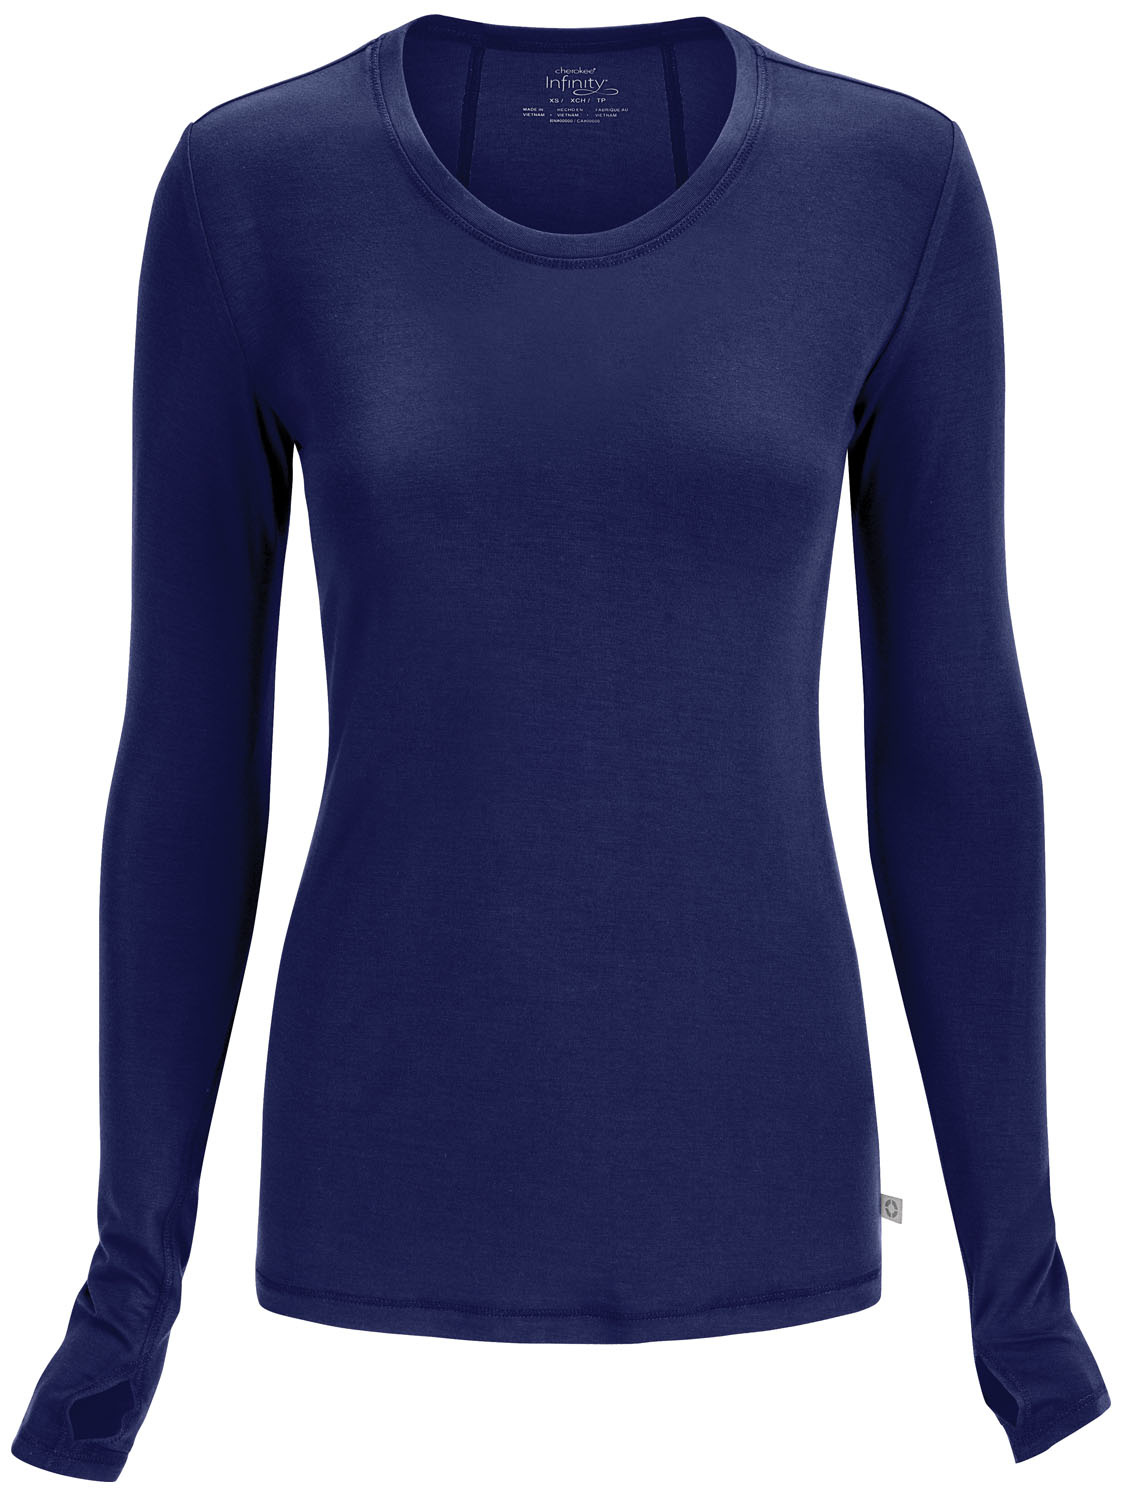 CHEROKEE Navy Blue Long Sleeve Women's Underscrub Shirts 2626A